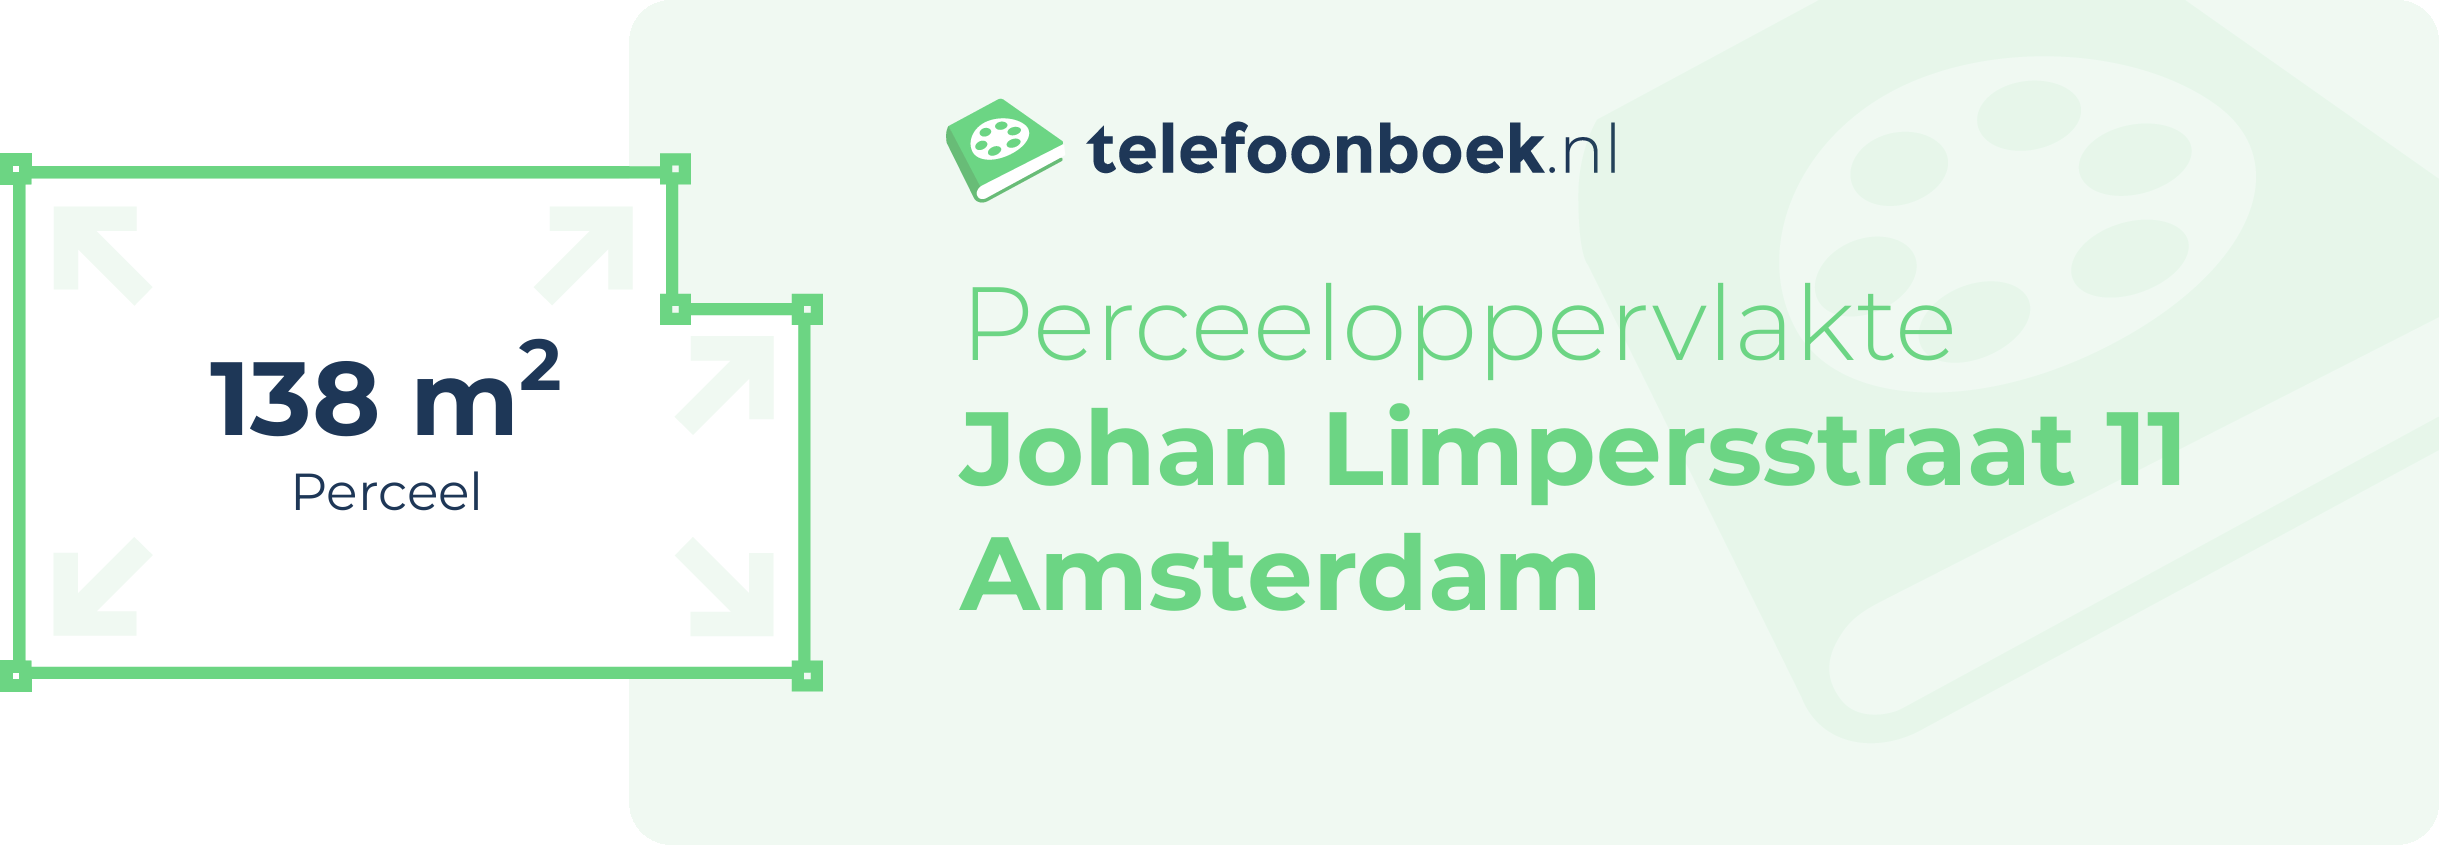 Perceeloppervlakte Johan Limpersstraat 11 Amsterdam